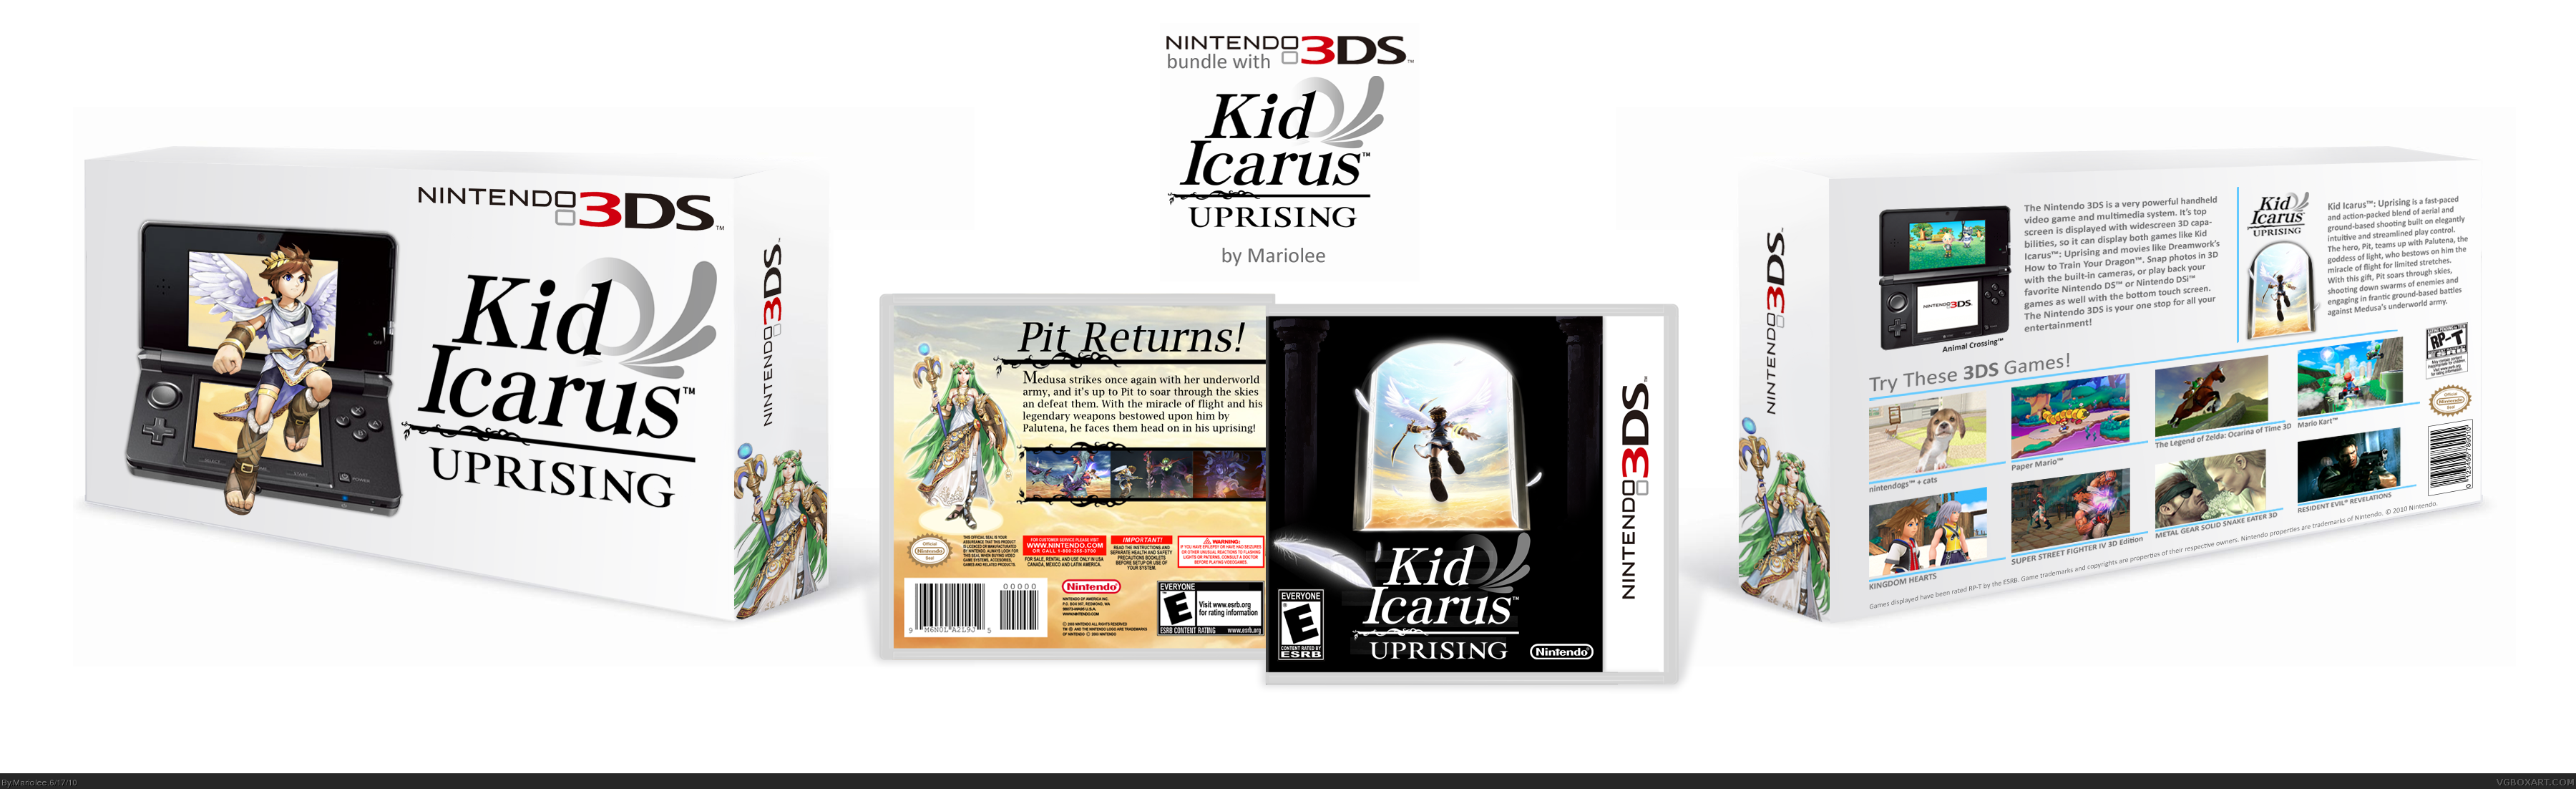 Kid Icarus Uprising Nintendo 3DS Bundle box cover